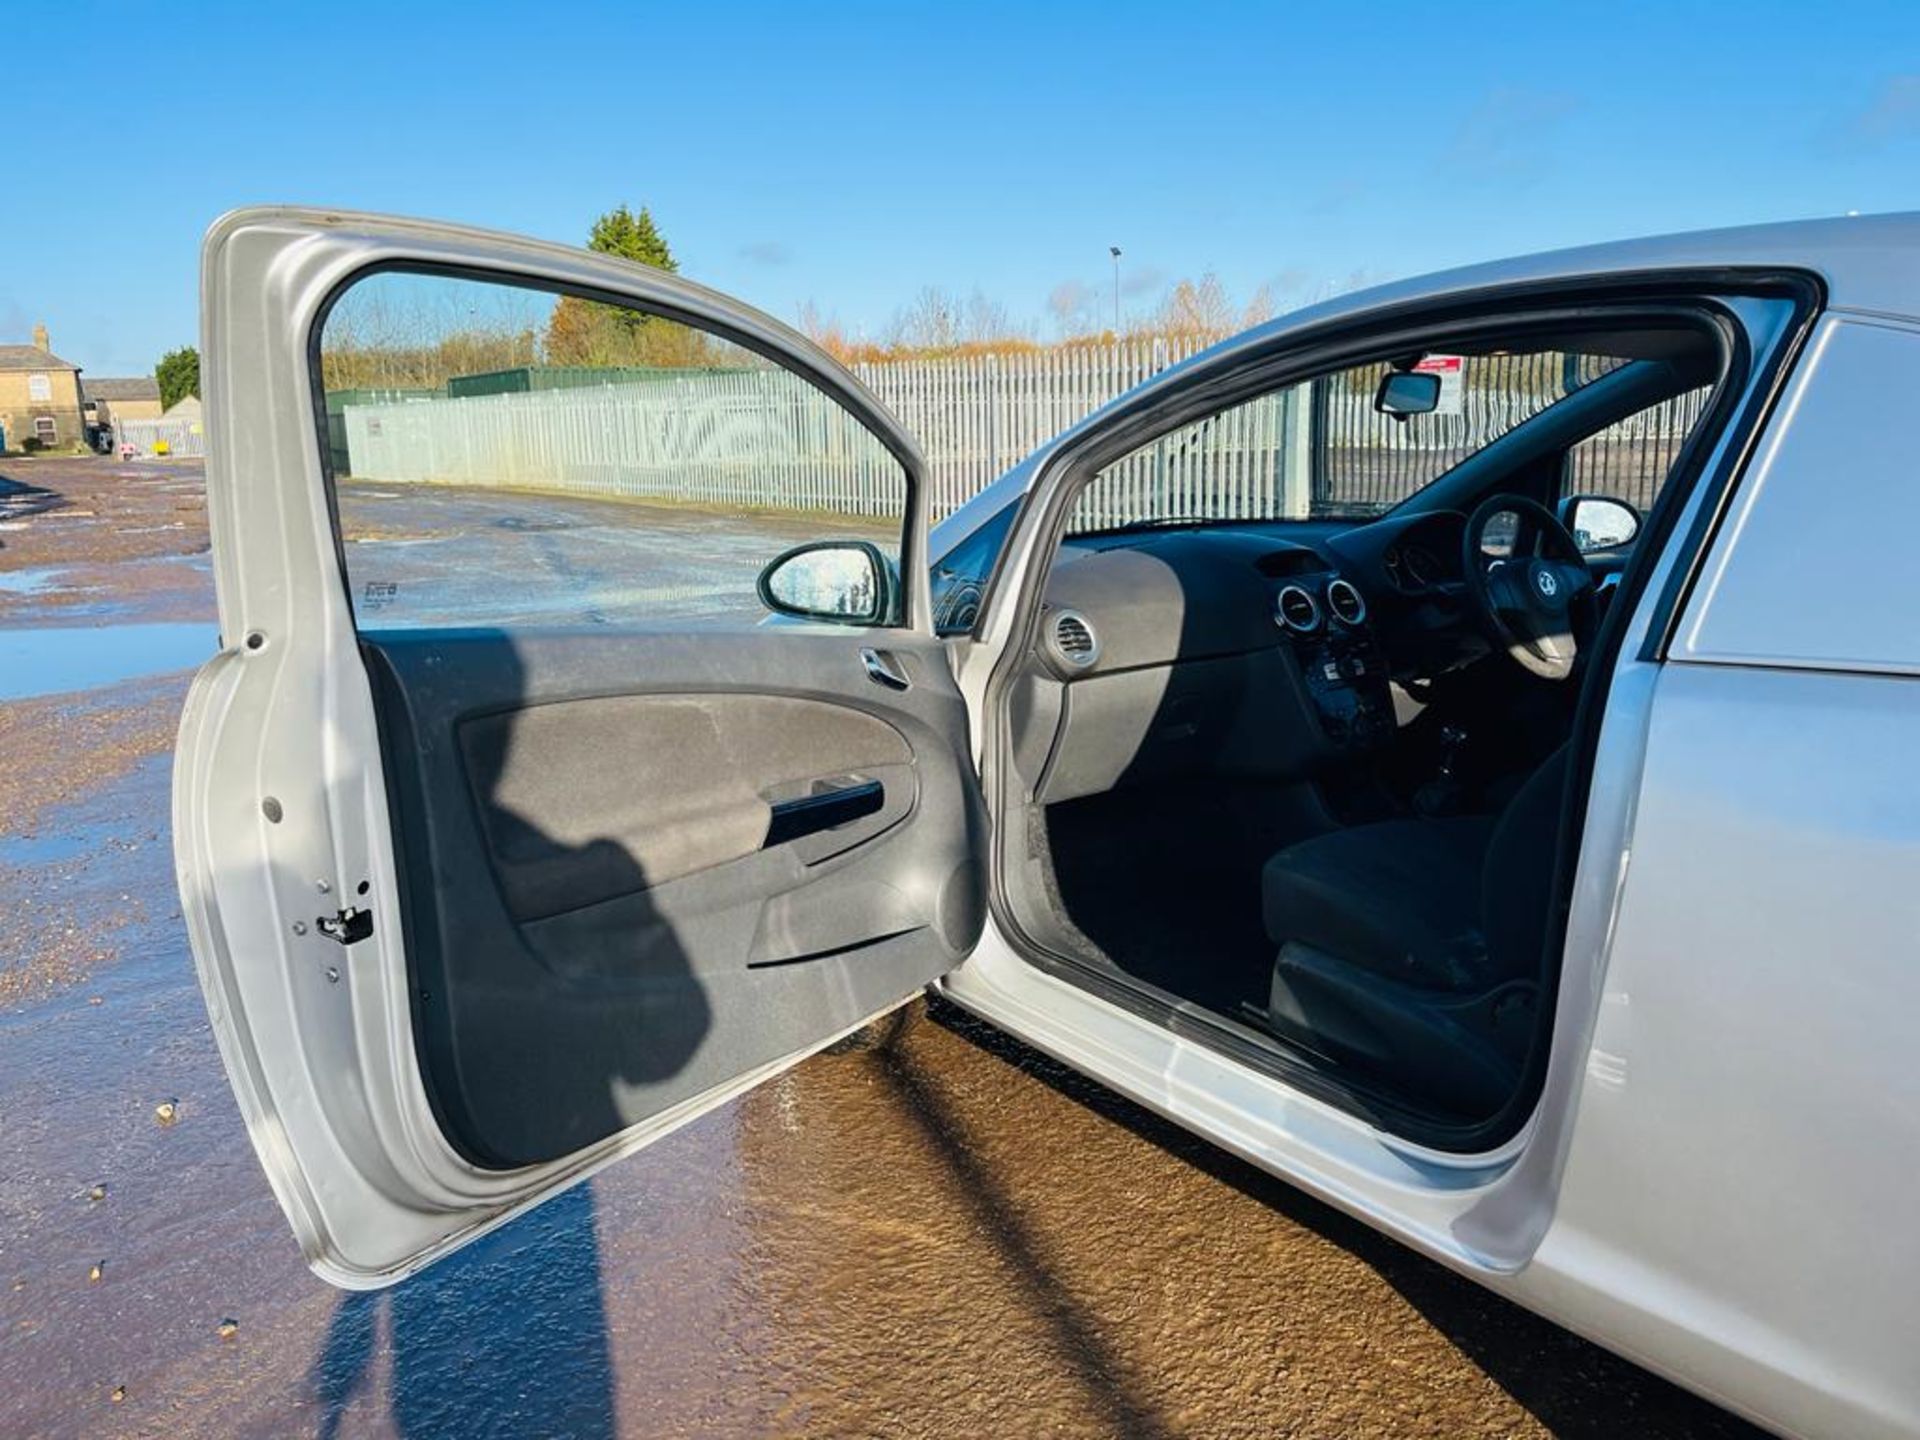 Vauxhall Corsa 1.3 CDTI 16v 95 Sportive 2014 '14 Reg' A/C - Panel Van - Image 19 of 25